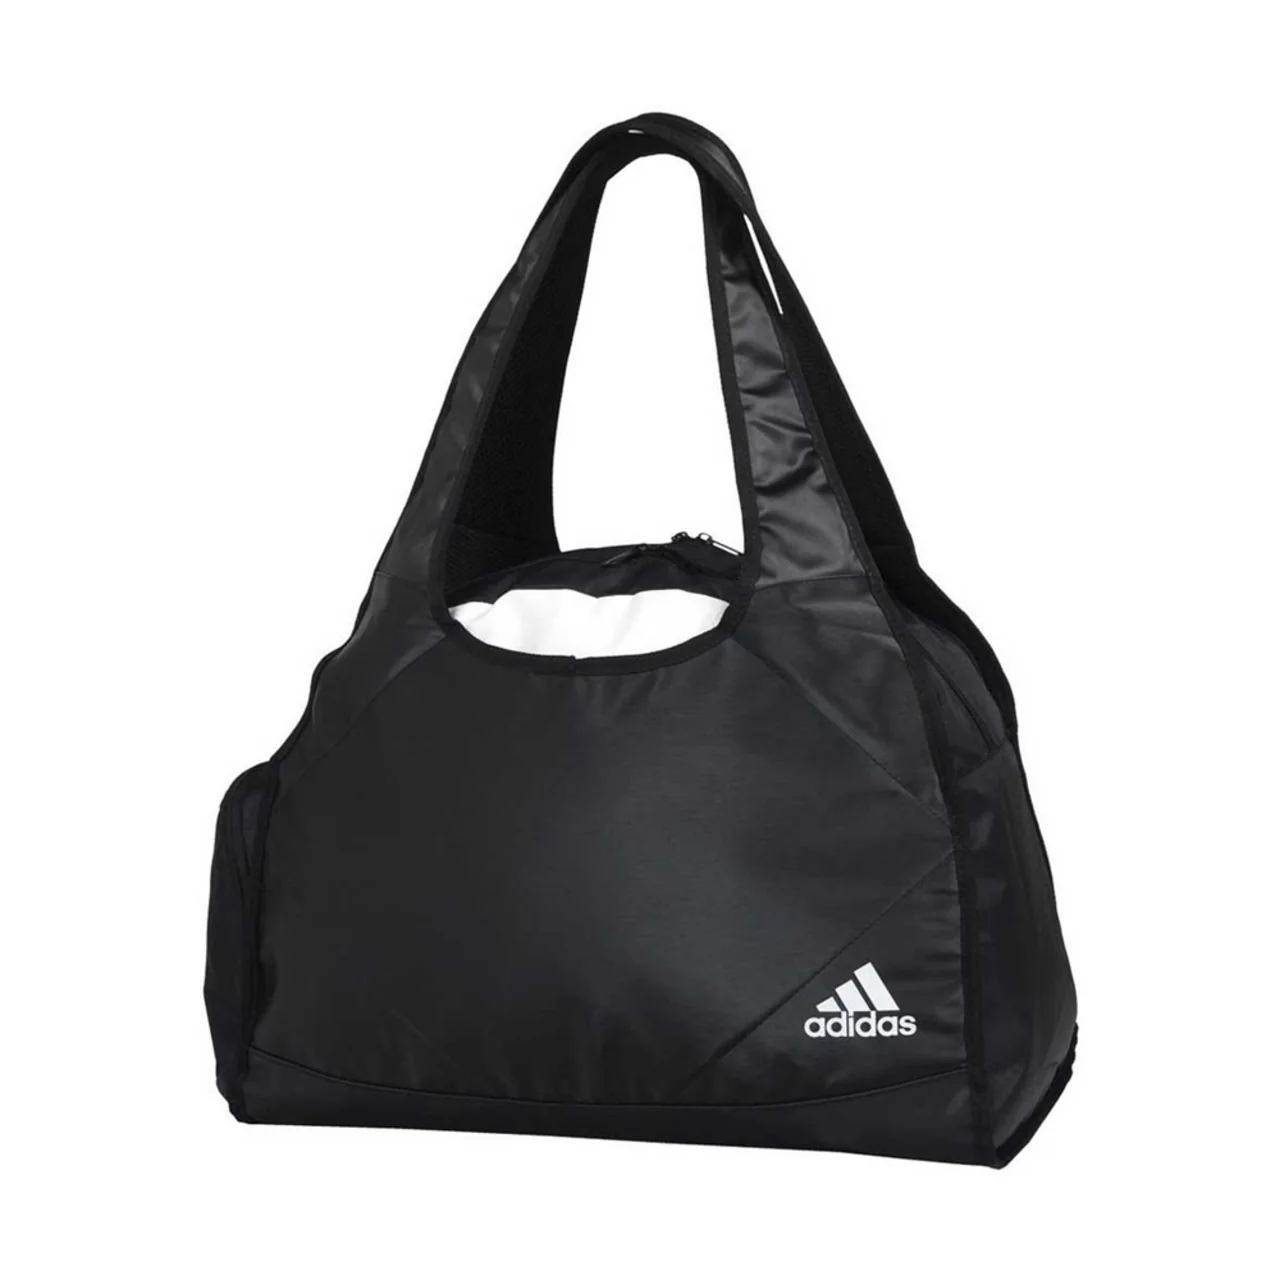 Adidas Big Weekend Bag 2.0 Black/White